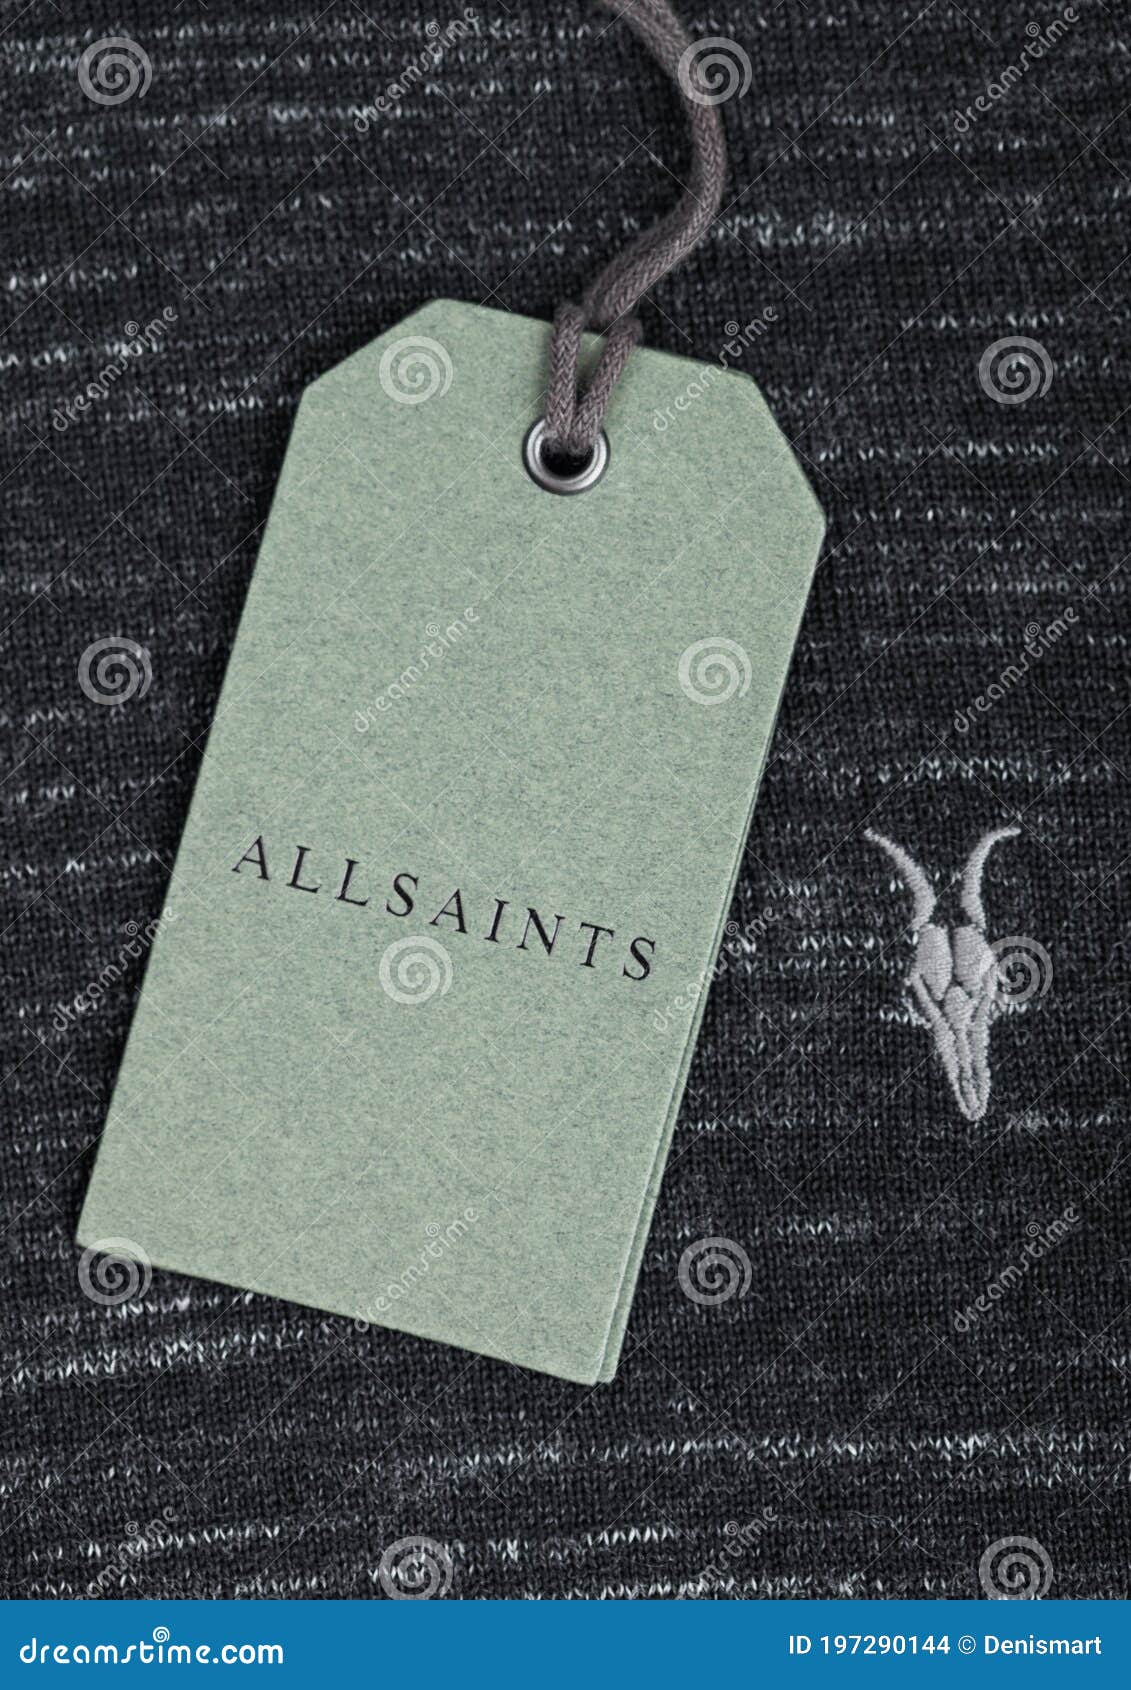 AllSaints Logo Advertising Sign Editorial Photo | CartoonDealer.com ...